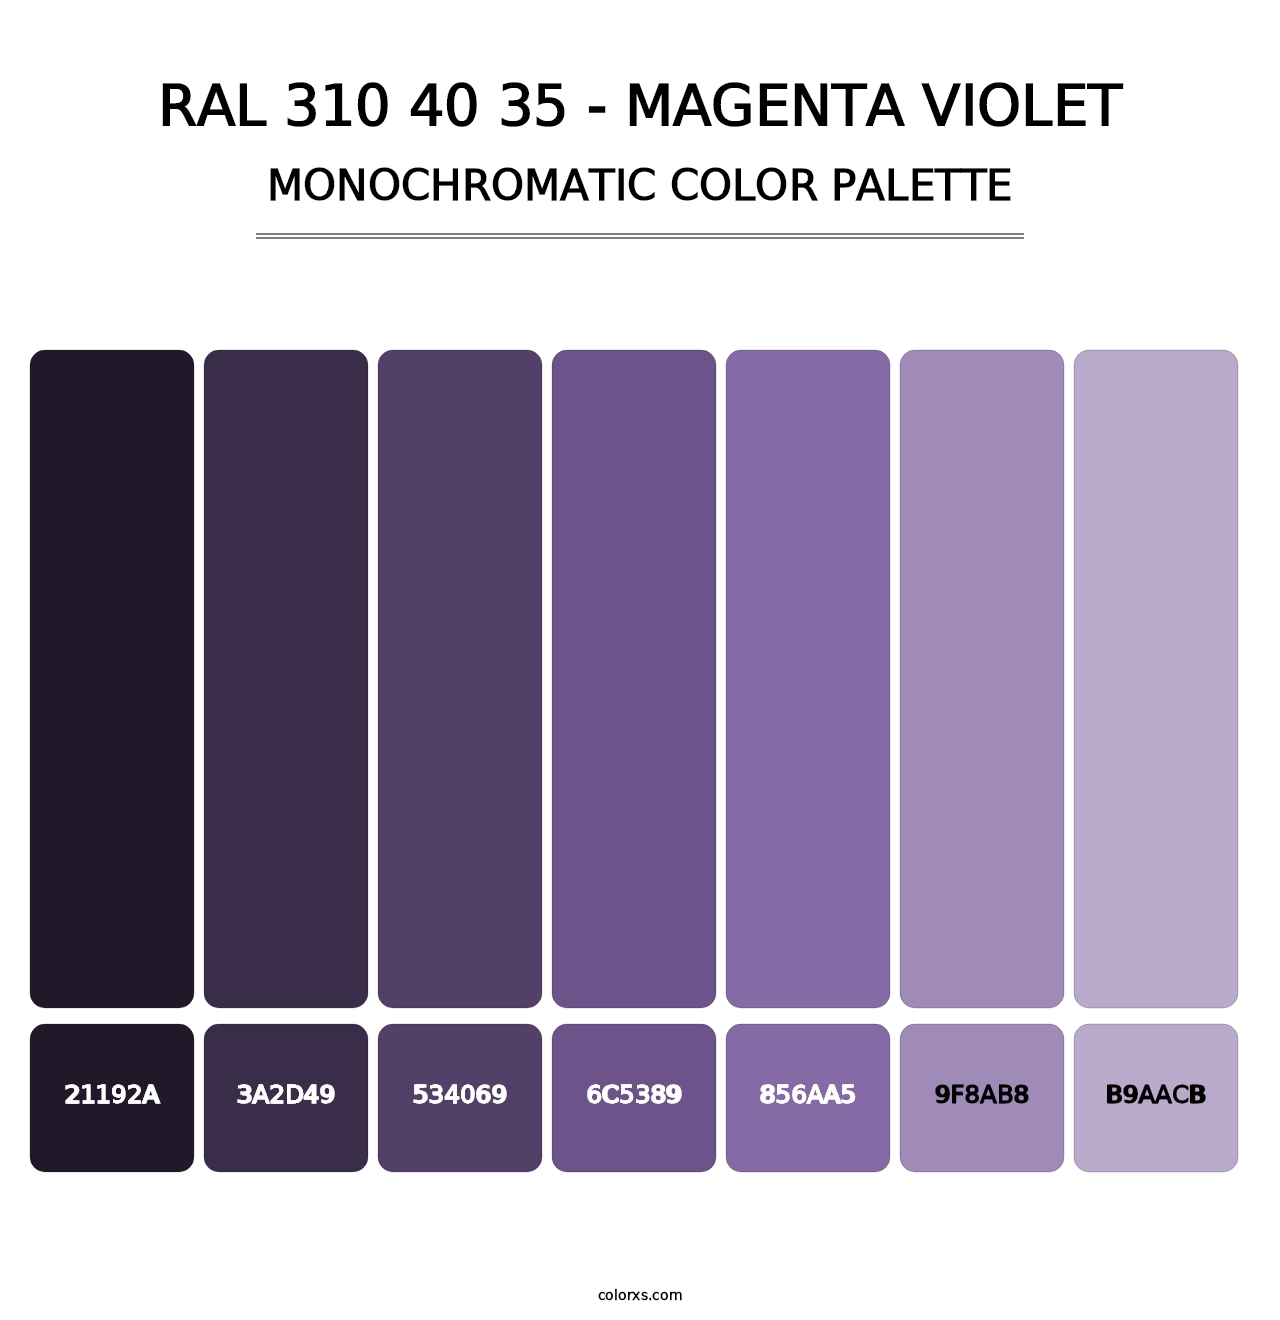 RAL 310 40 35 - Magenta Violet - Monochromatic Color Palette